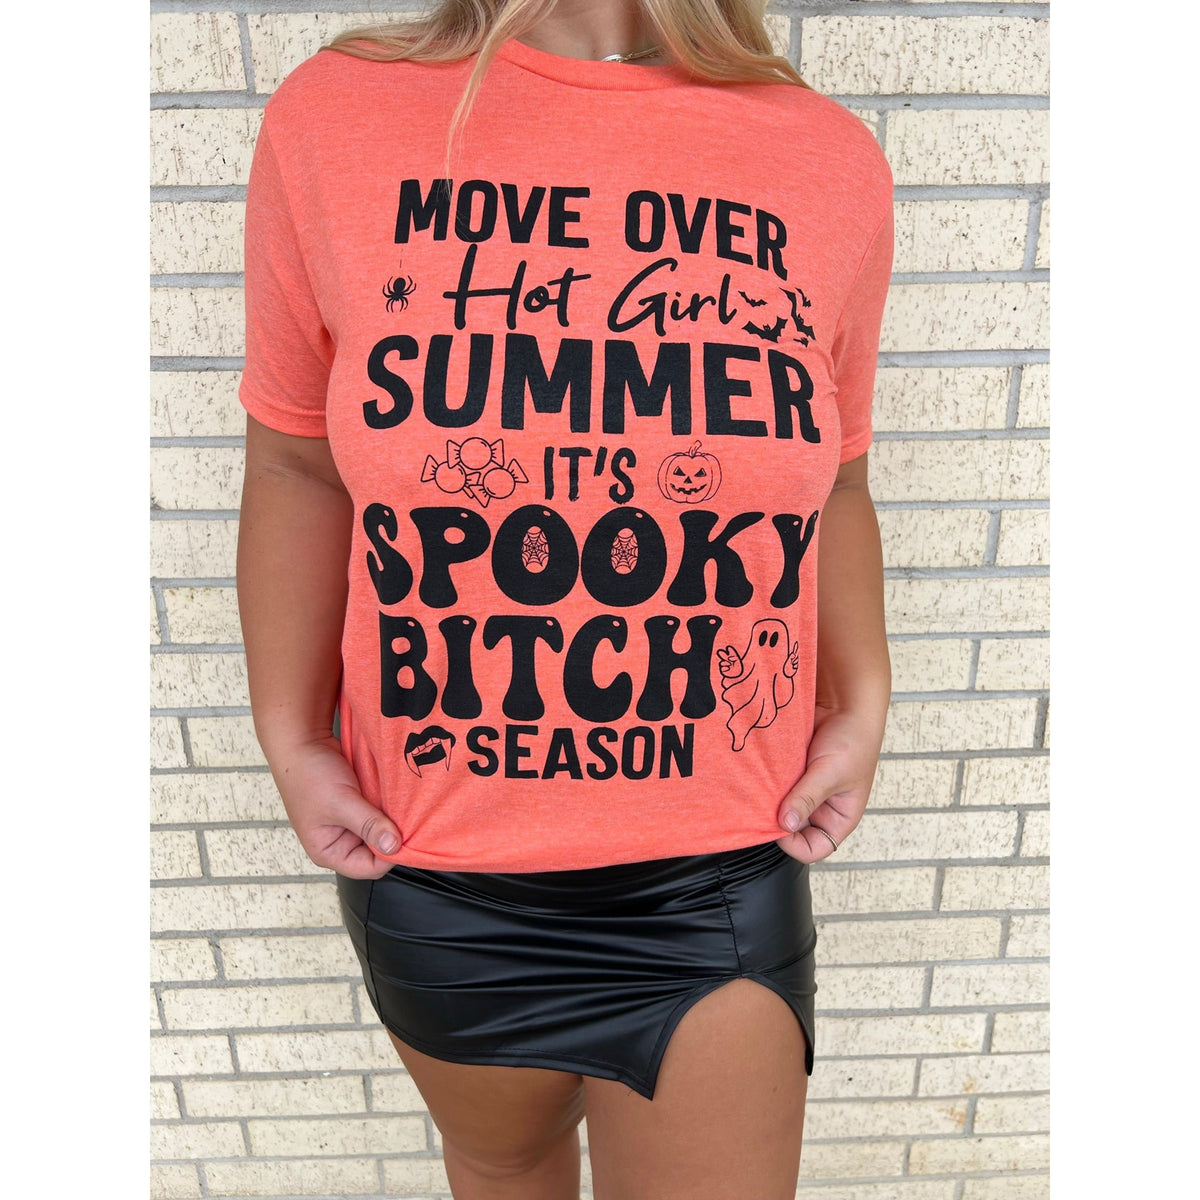 Spooky Bitch Season Sweatshirt or Tee